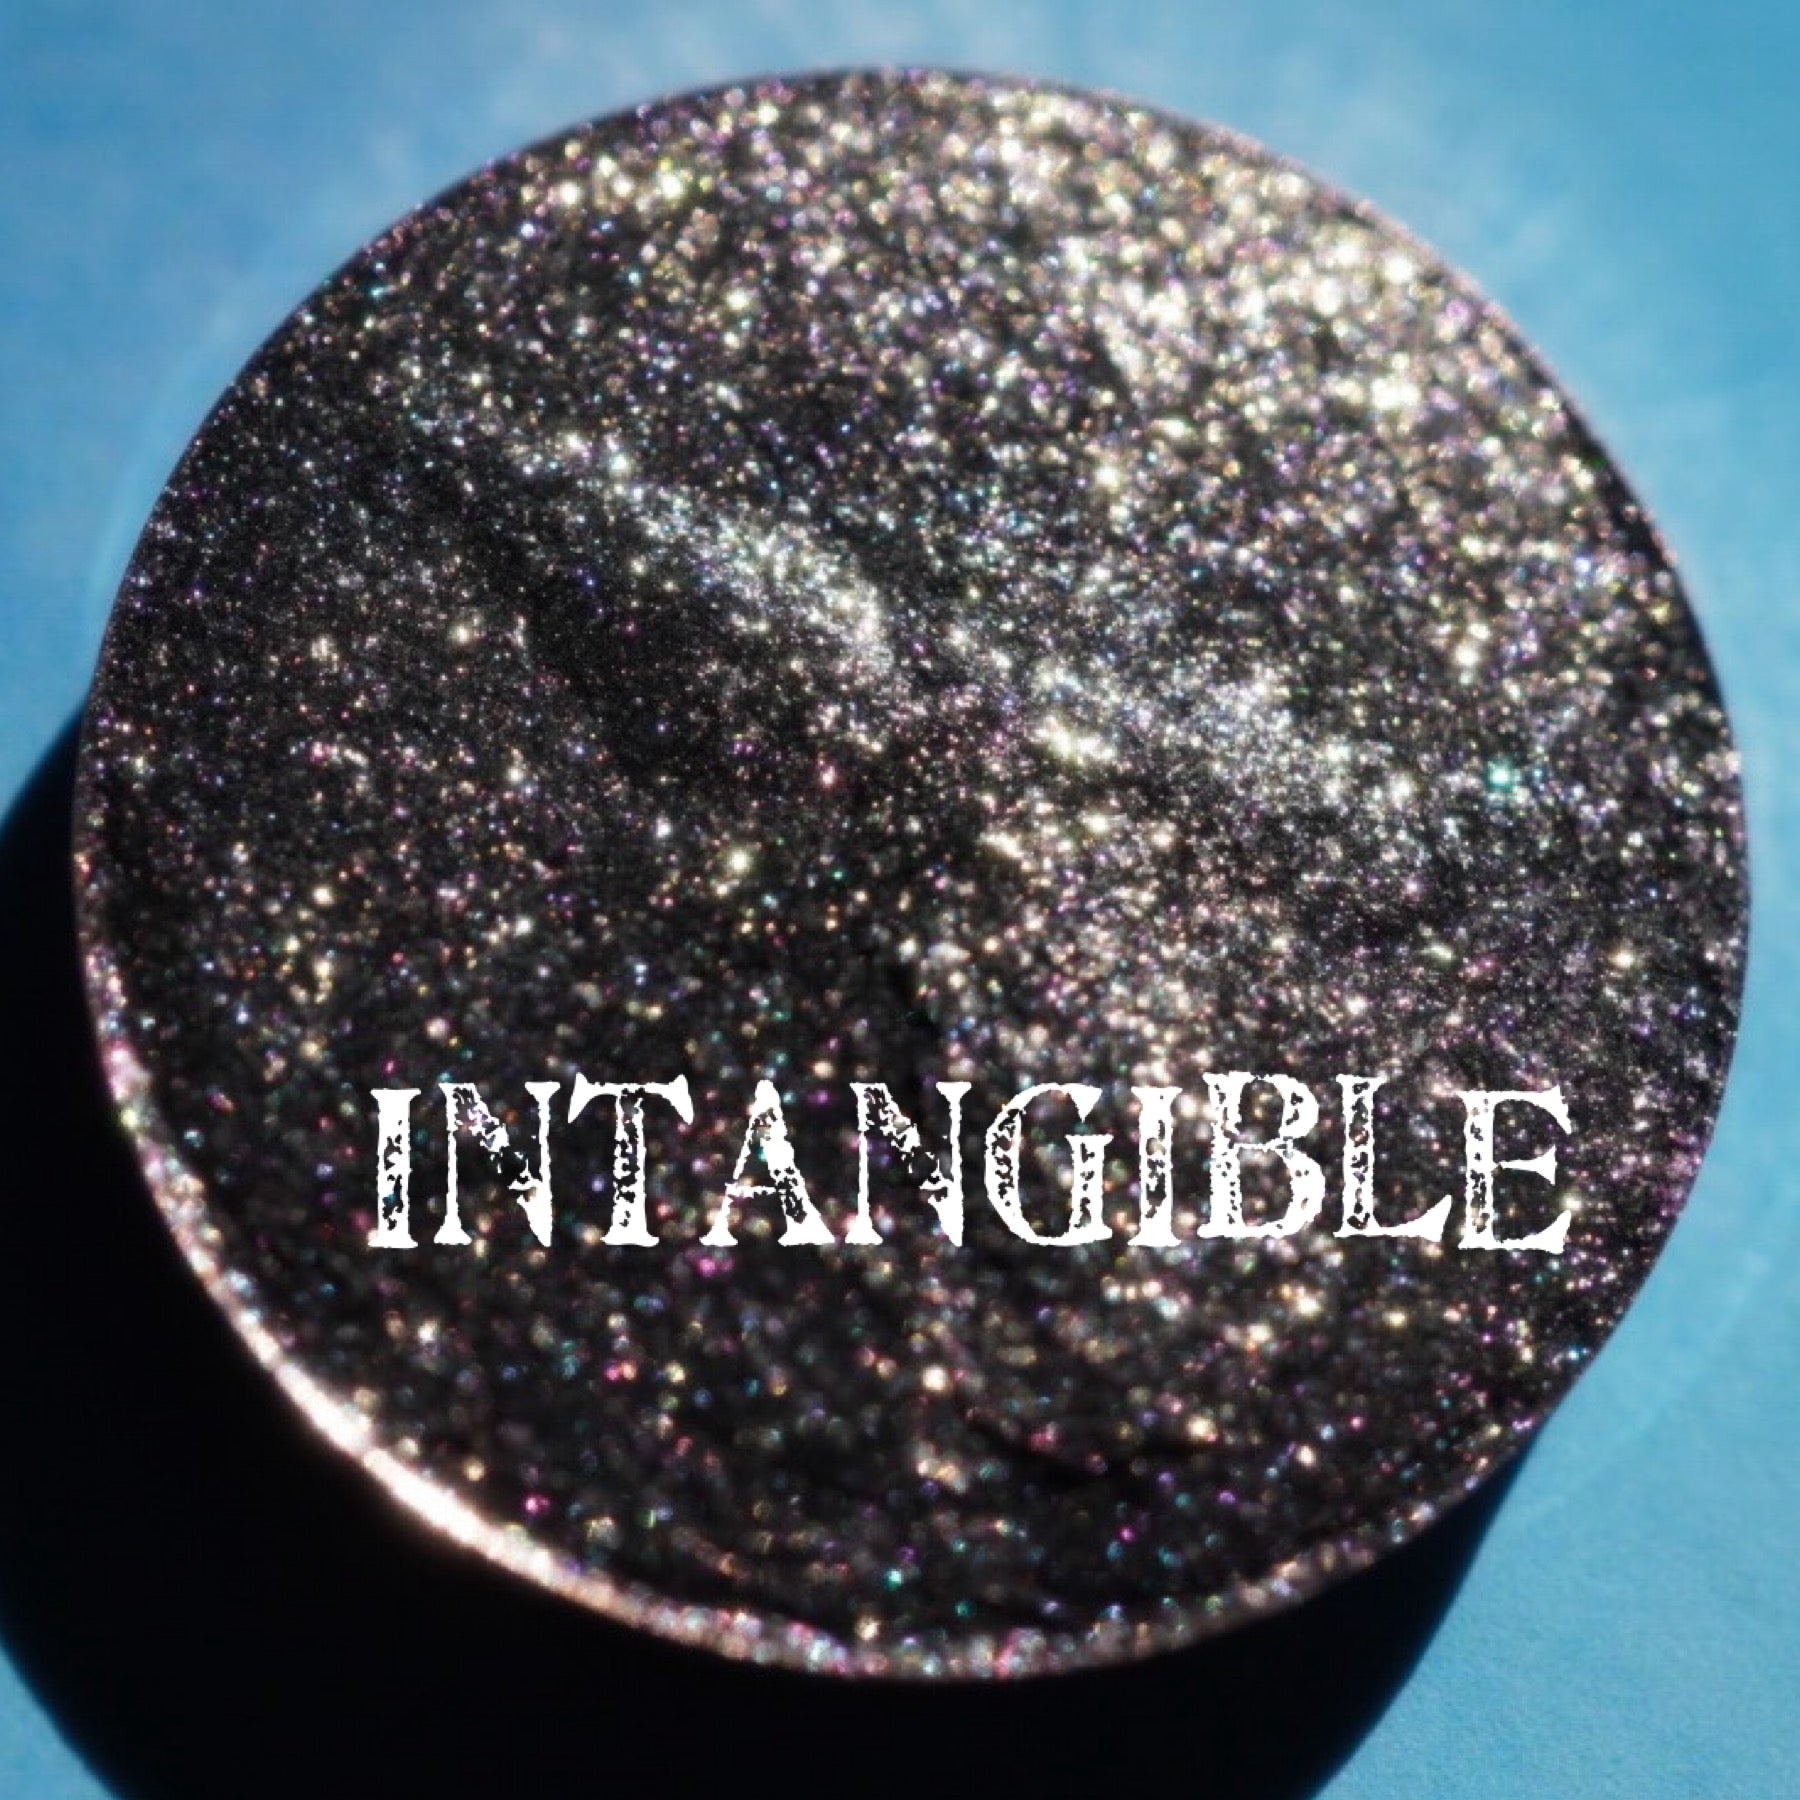 Intangible [Mystic Dreams]